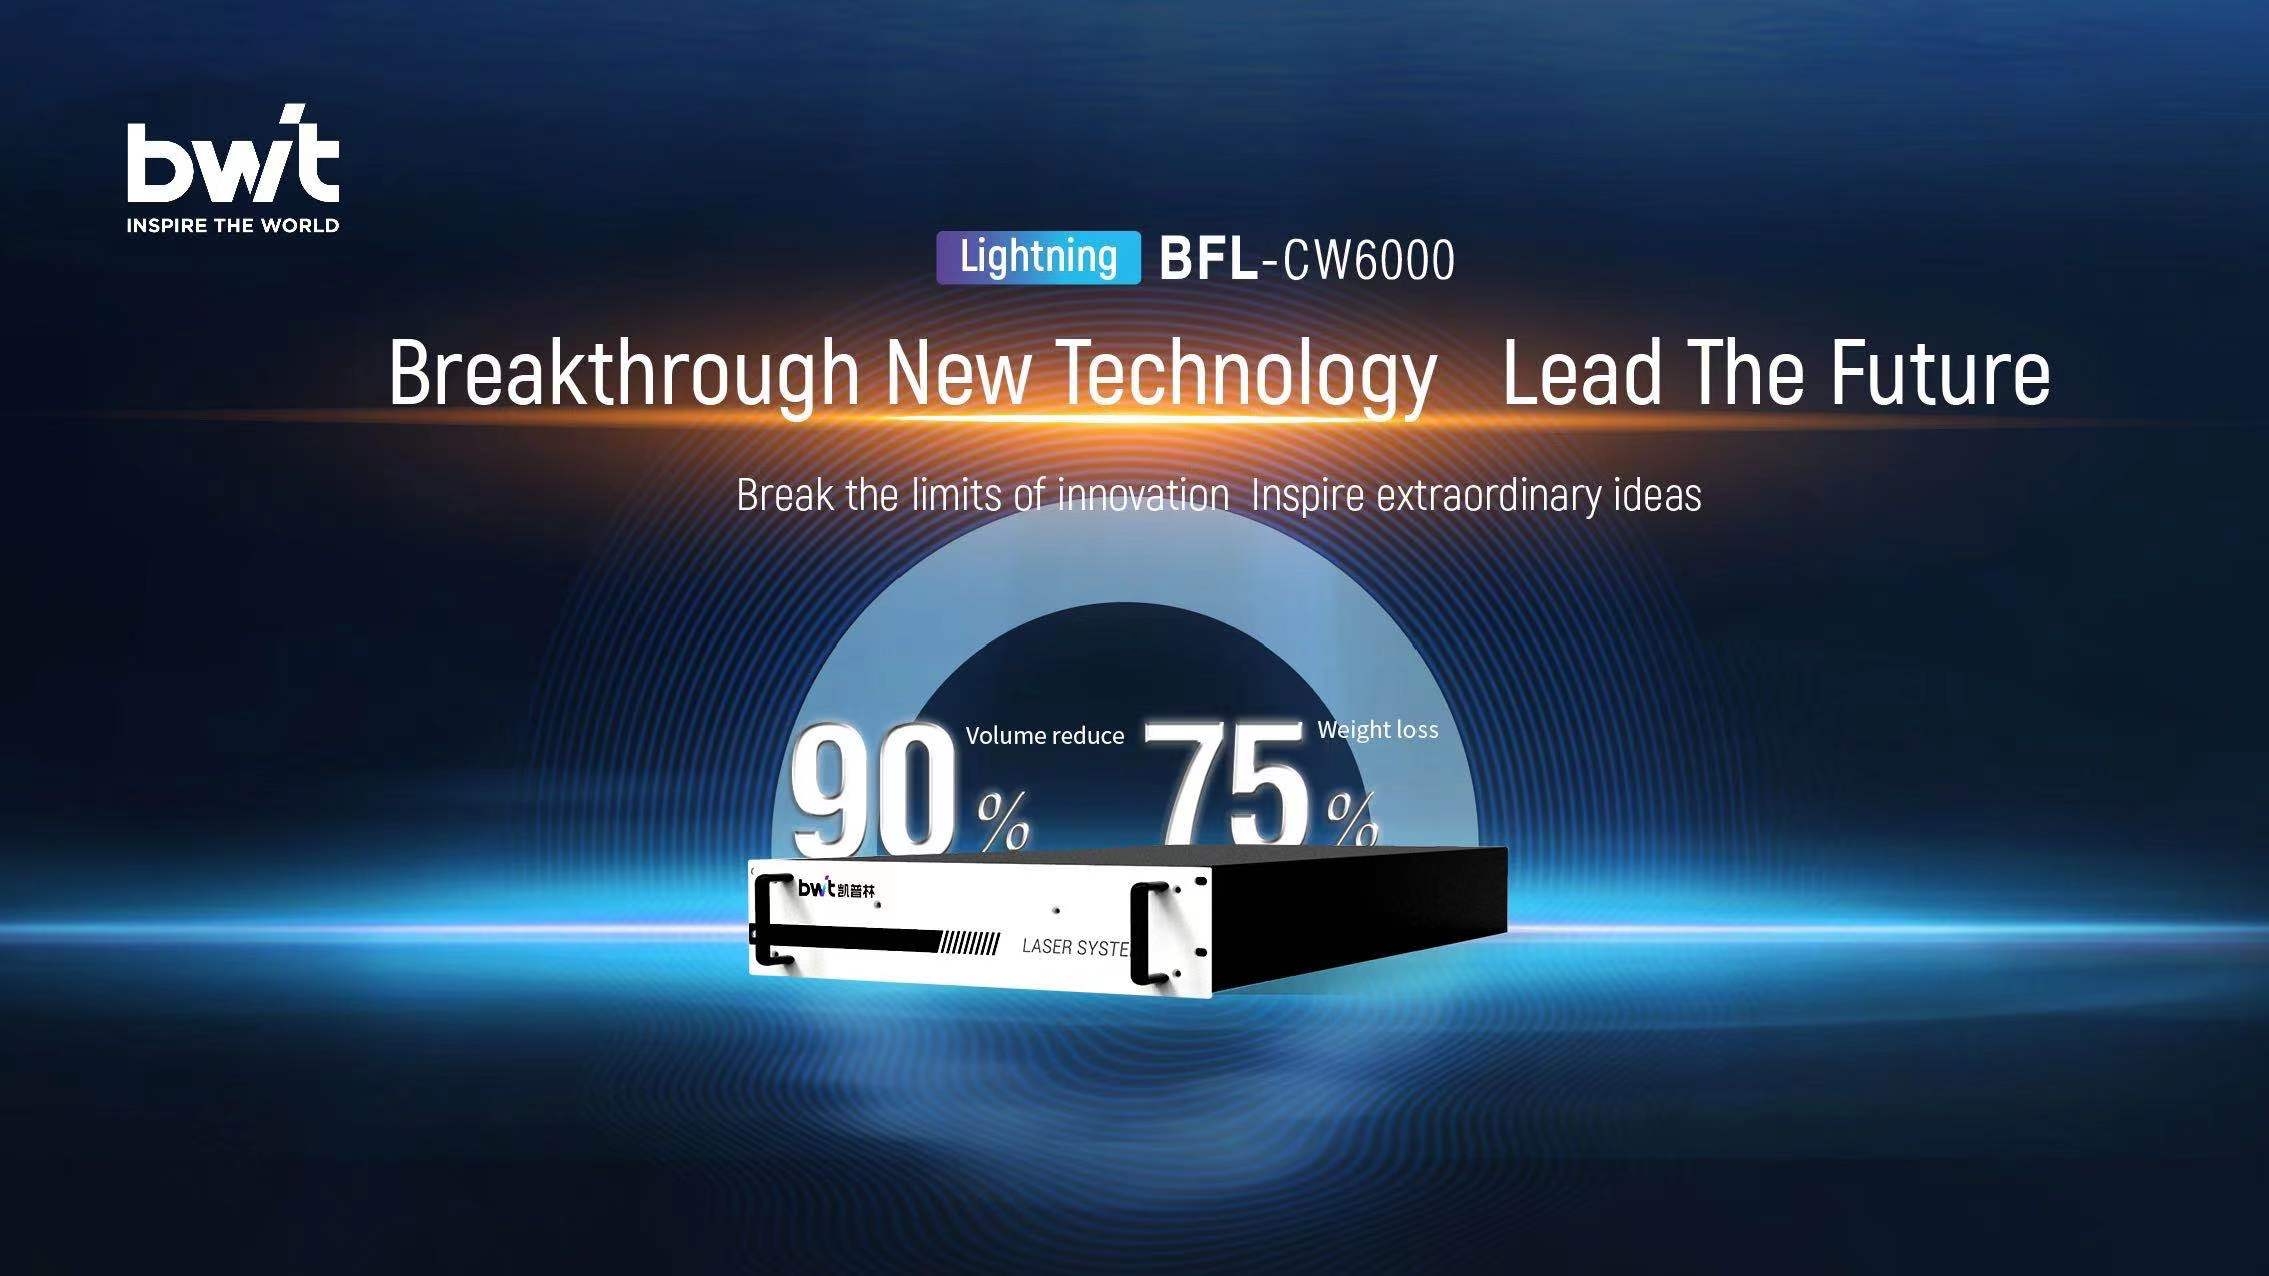 BWT Lightning 6000W ফাইবার লেজার চালু করেছে |ছোট, হালকা এবং স্মার্ট